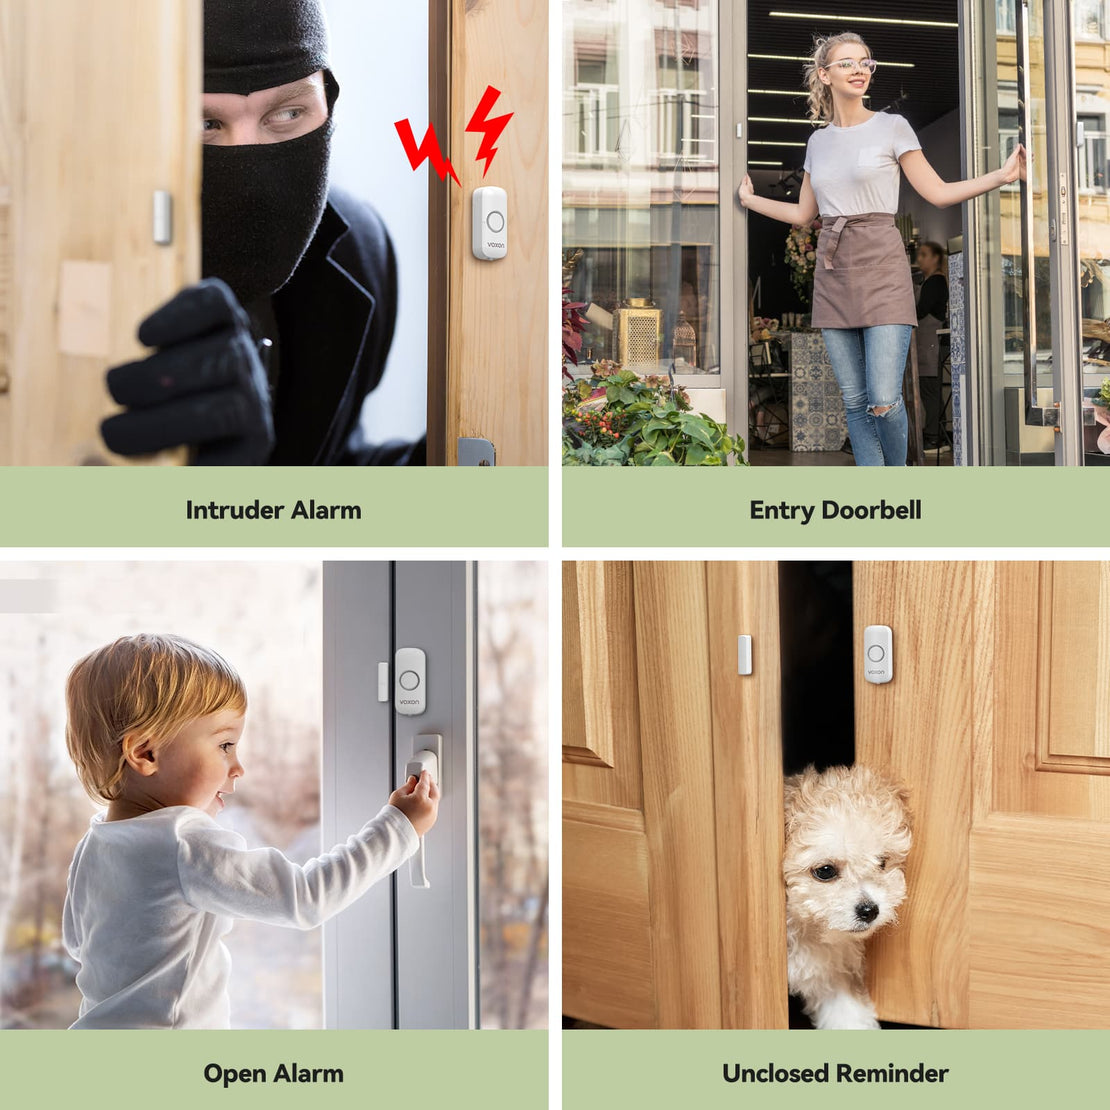 VOXON Personal Security Door Window Alarm Sensor for Home Security Kids Safety for Cars, Sheds, Caravans